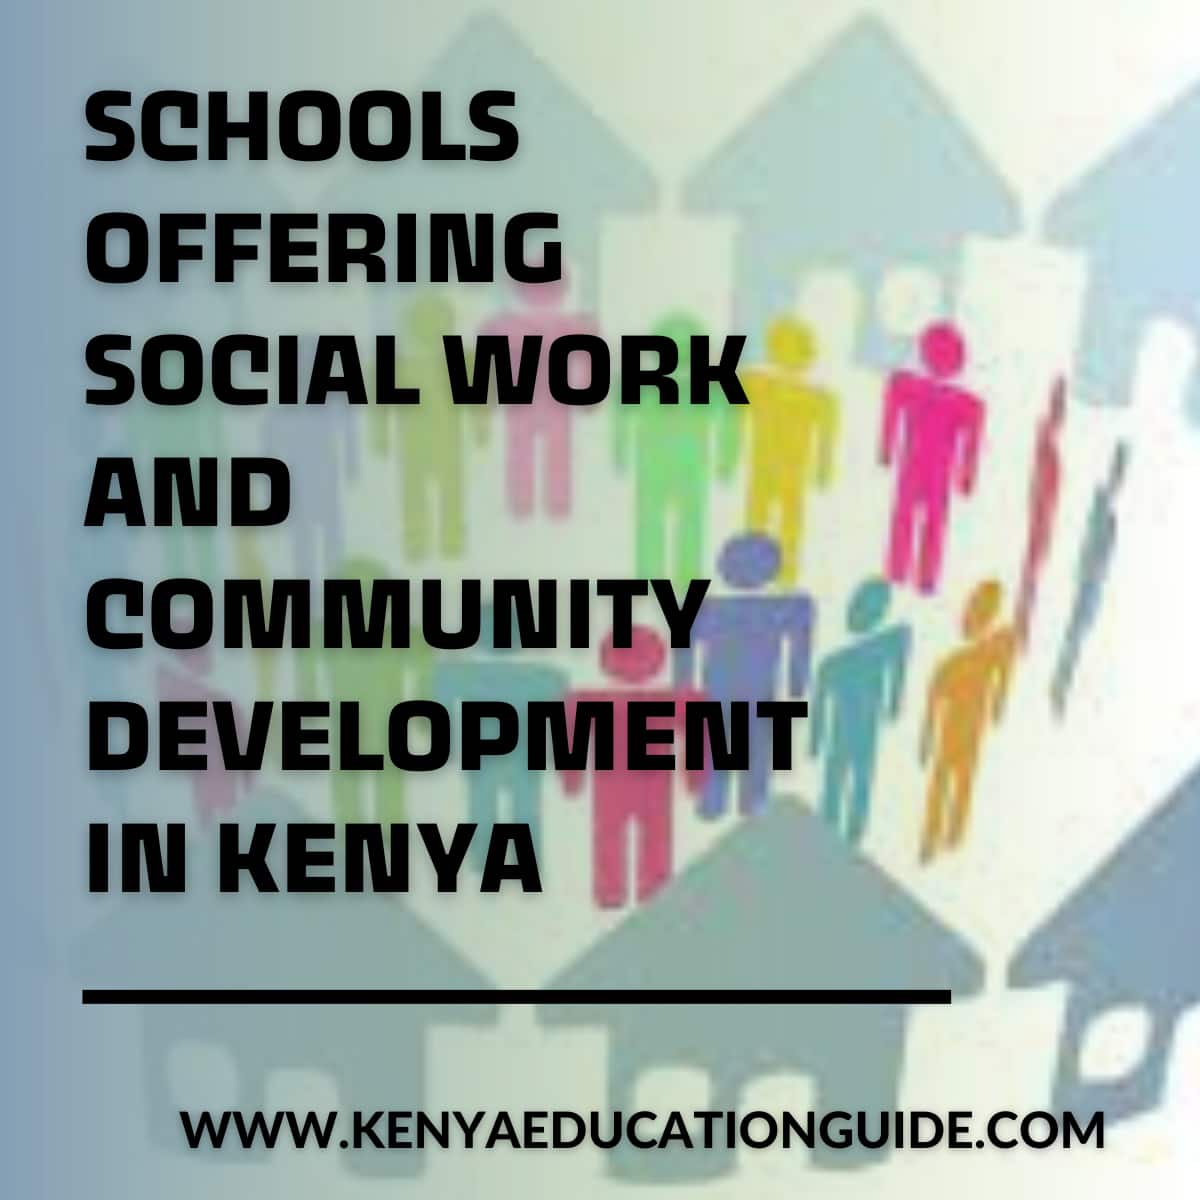 Schools Offering Social Work and Community Development in Kenya